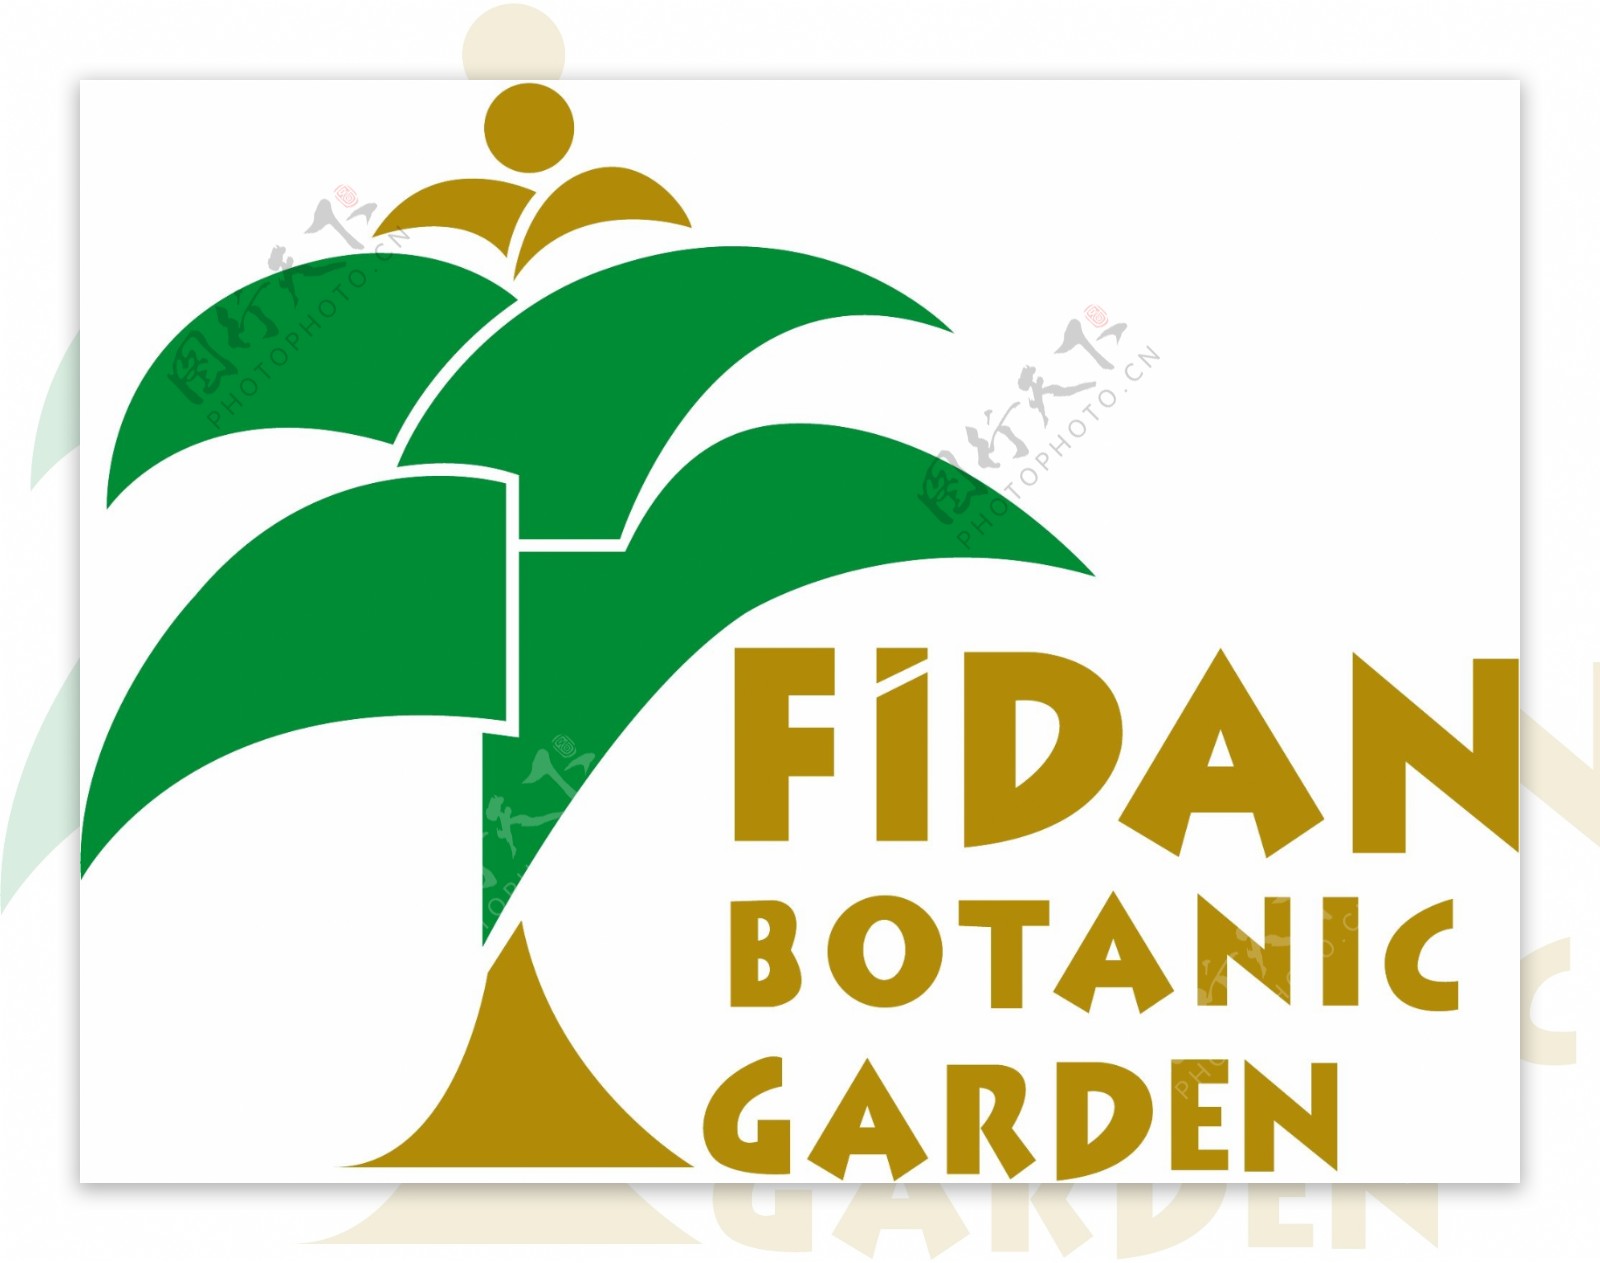 fidan植物园